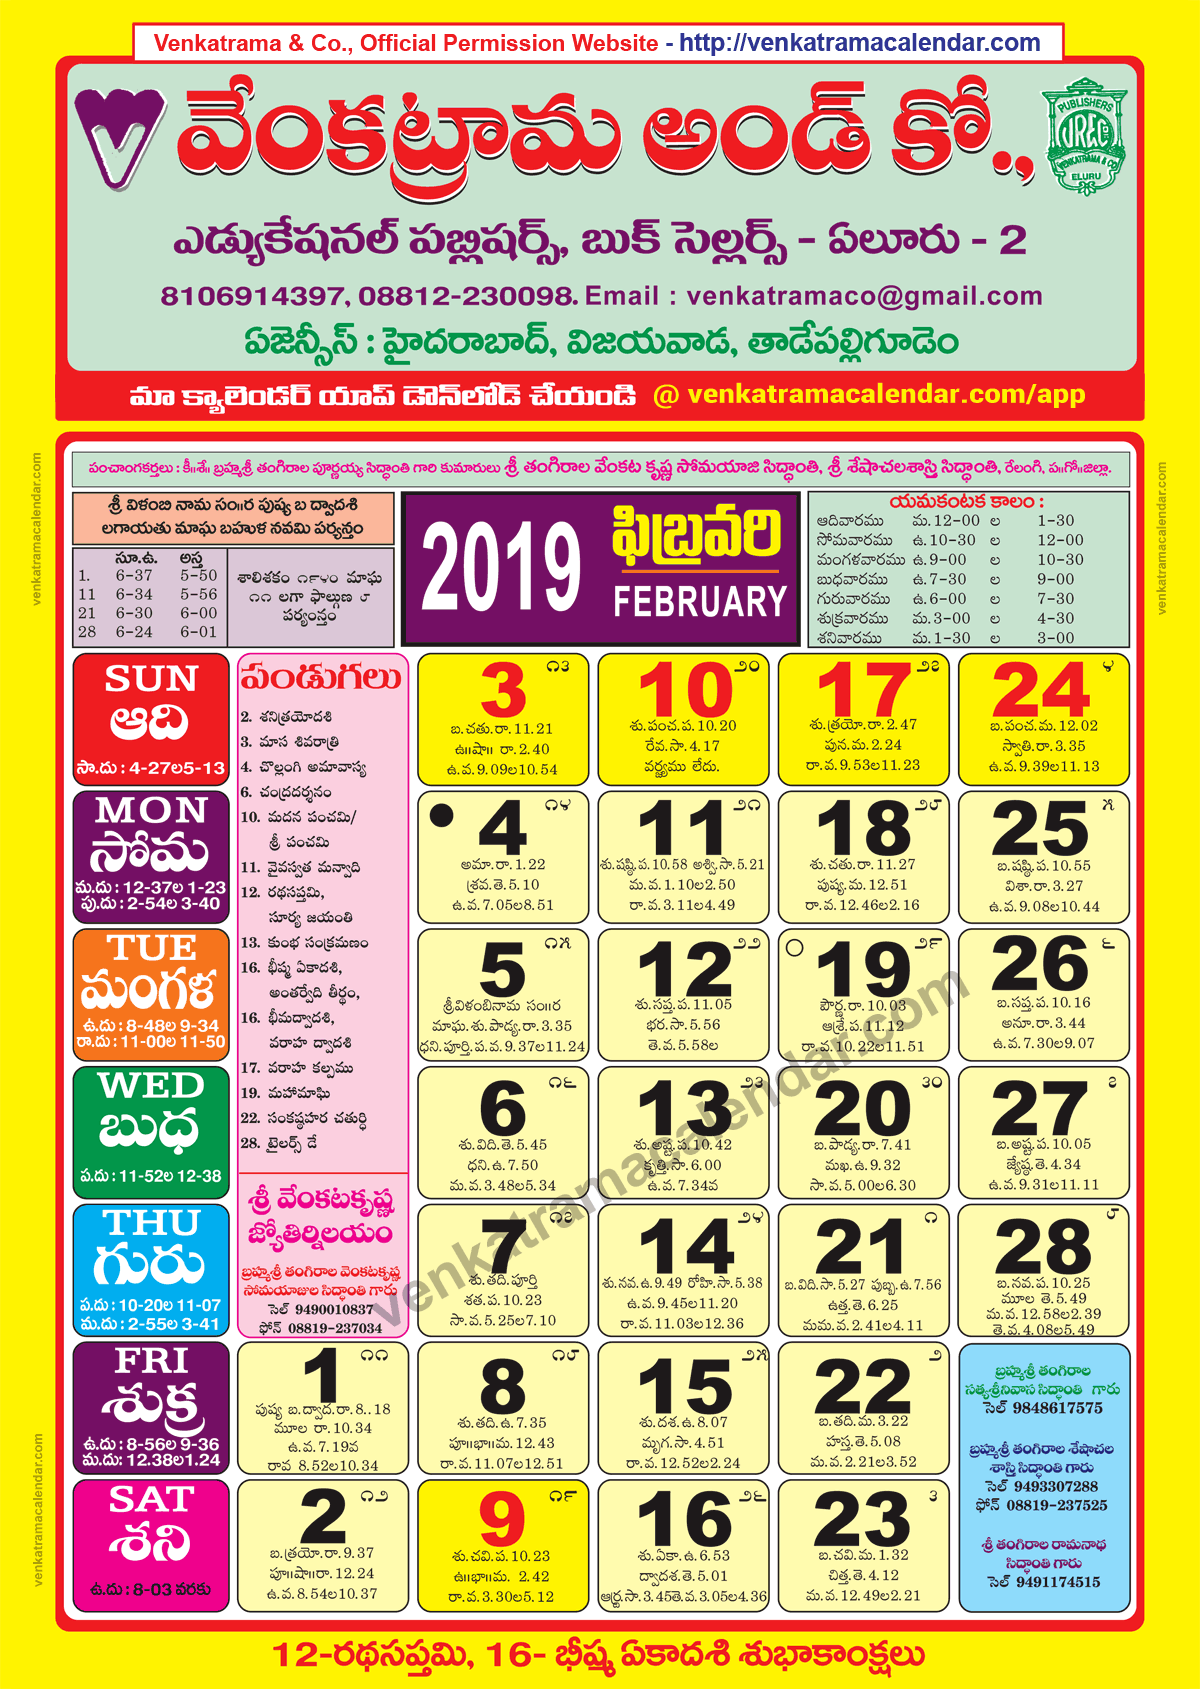 venkatrama-co-2019-february-telugu-calendar-colour